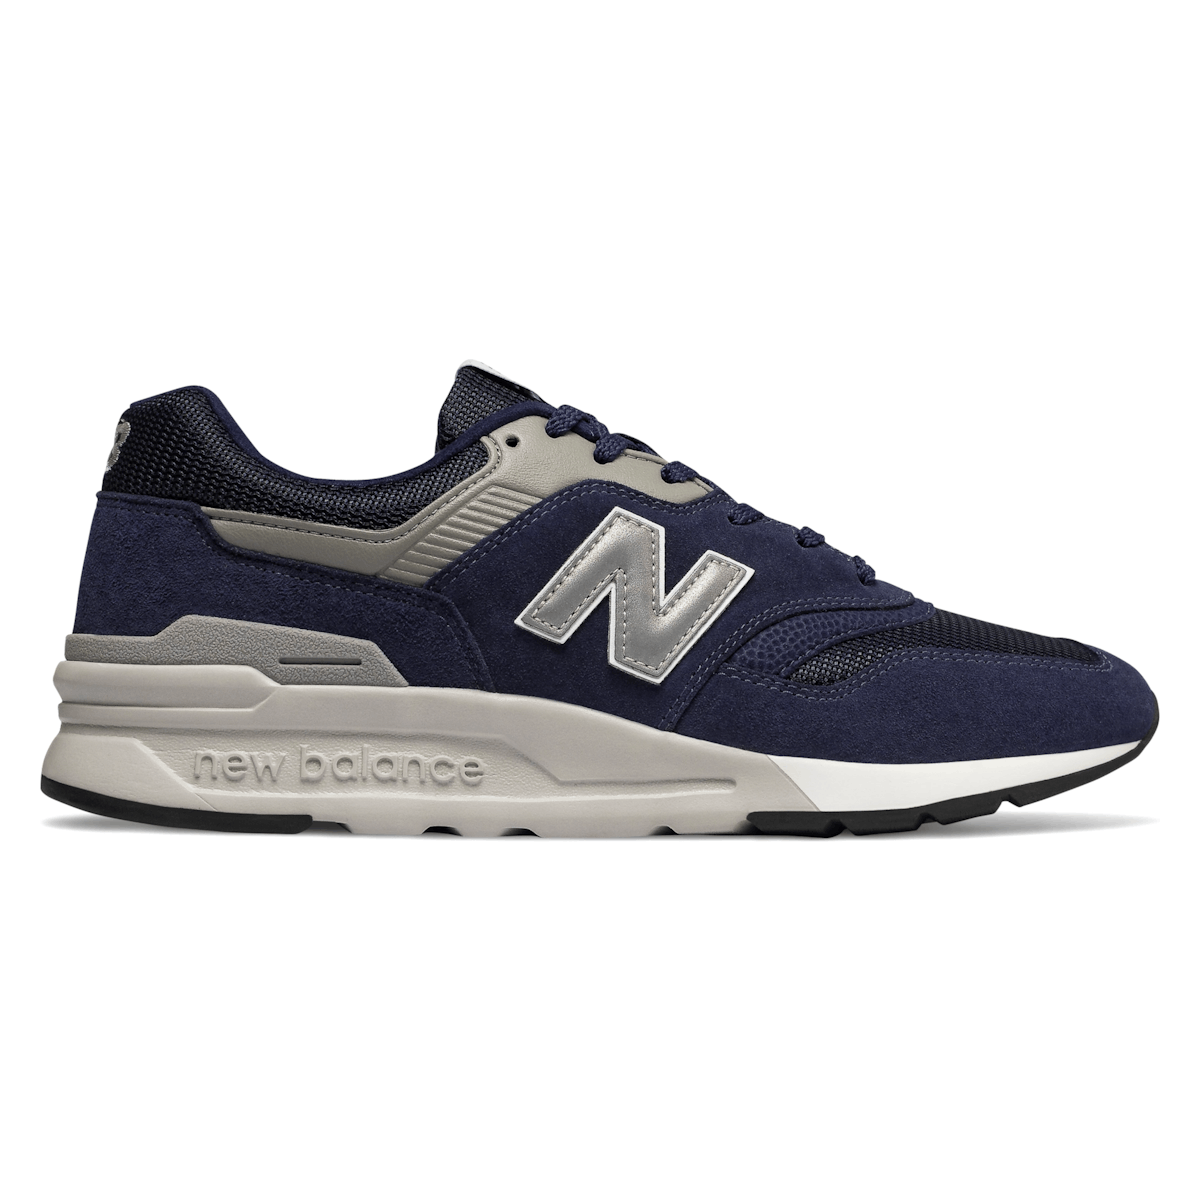 New Balance 997 Navy Grey